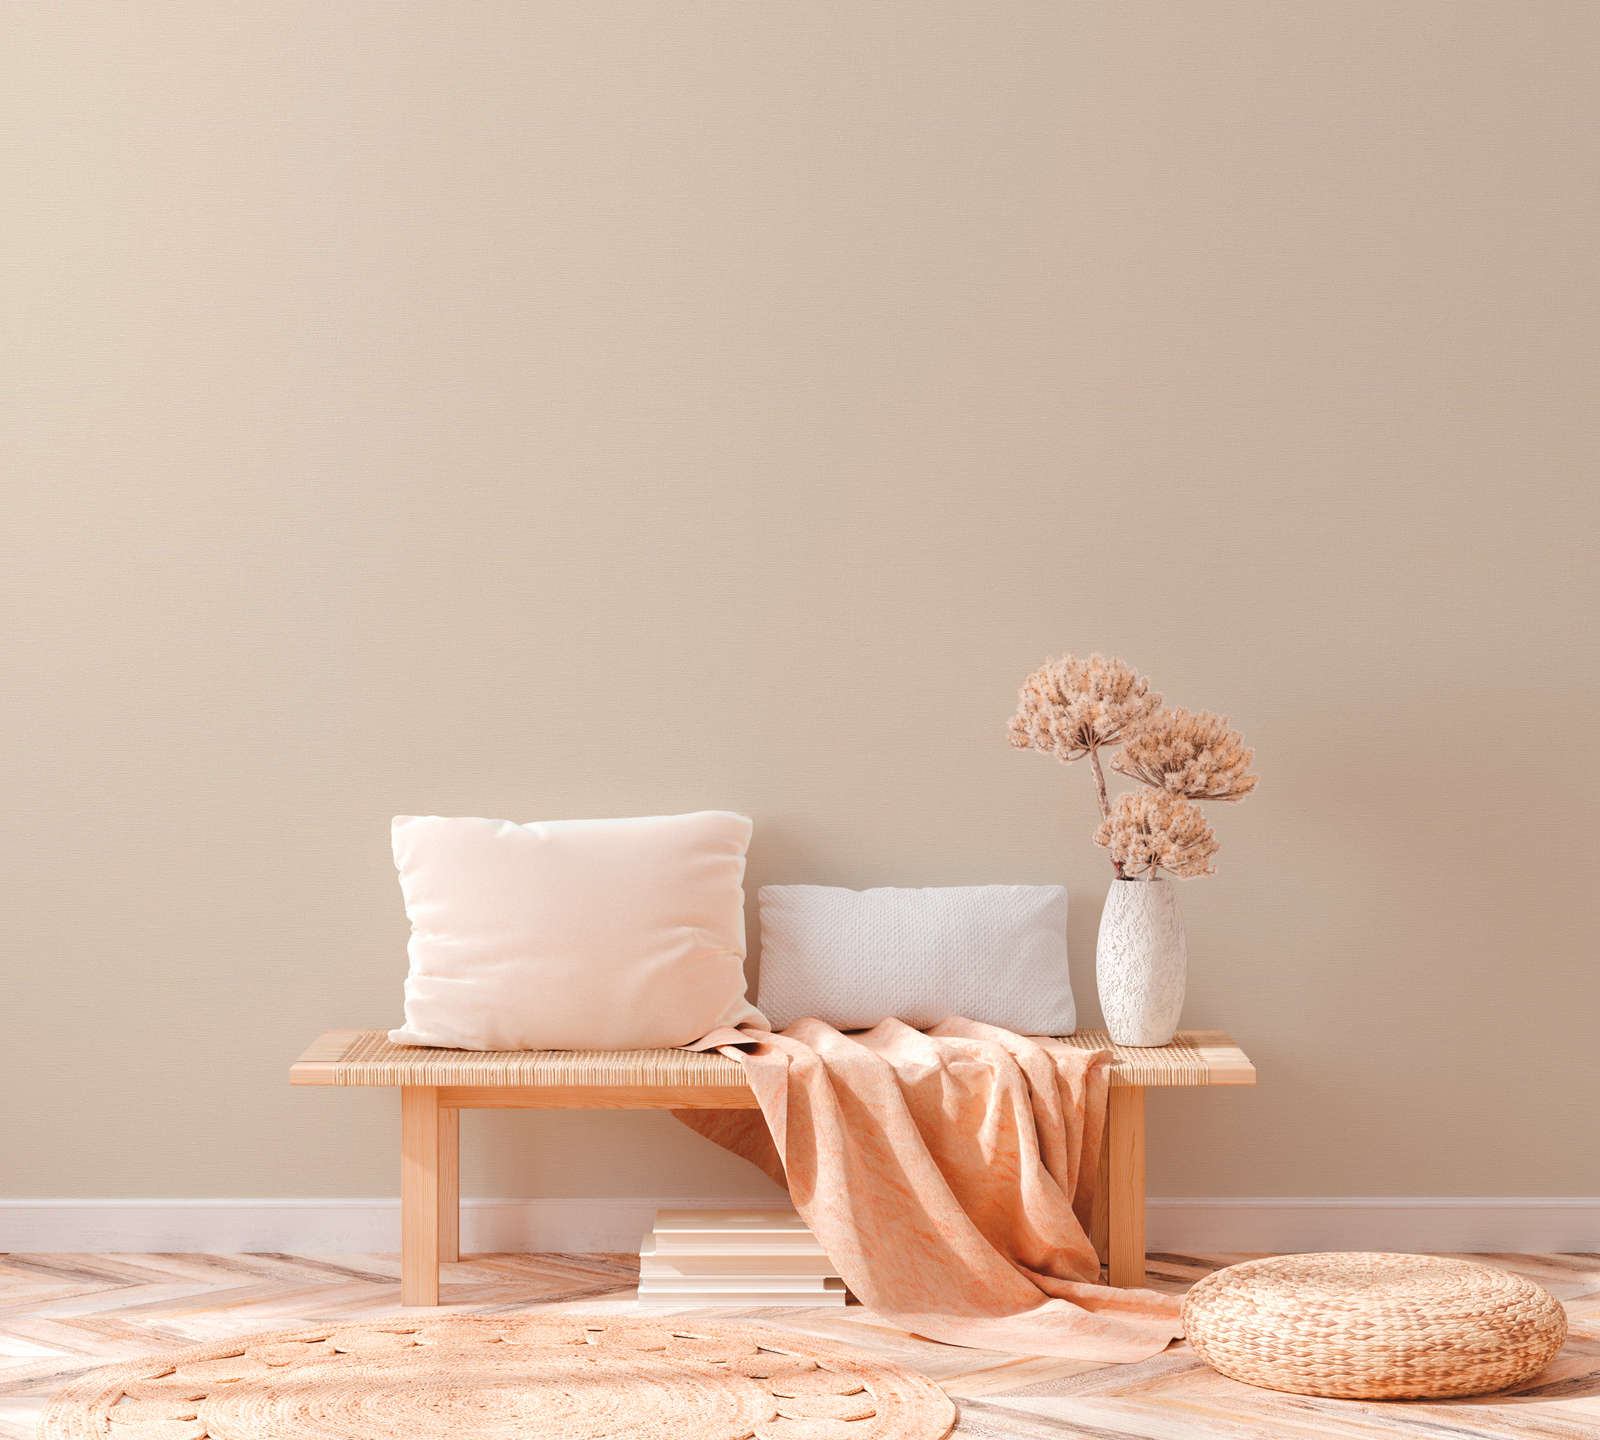             Non-woven wallpaper plain with light structure PVC-free - beige, cream
        